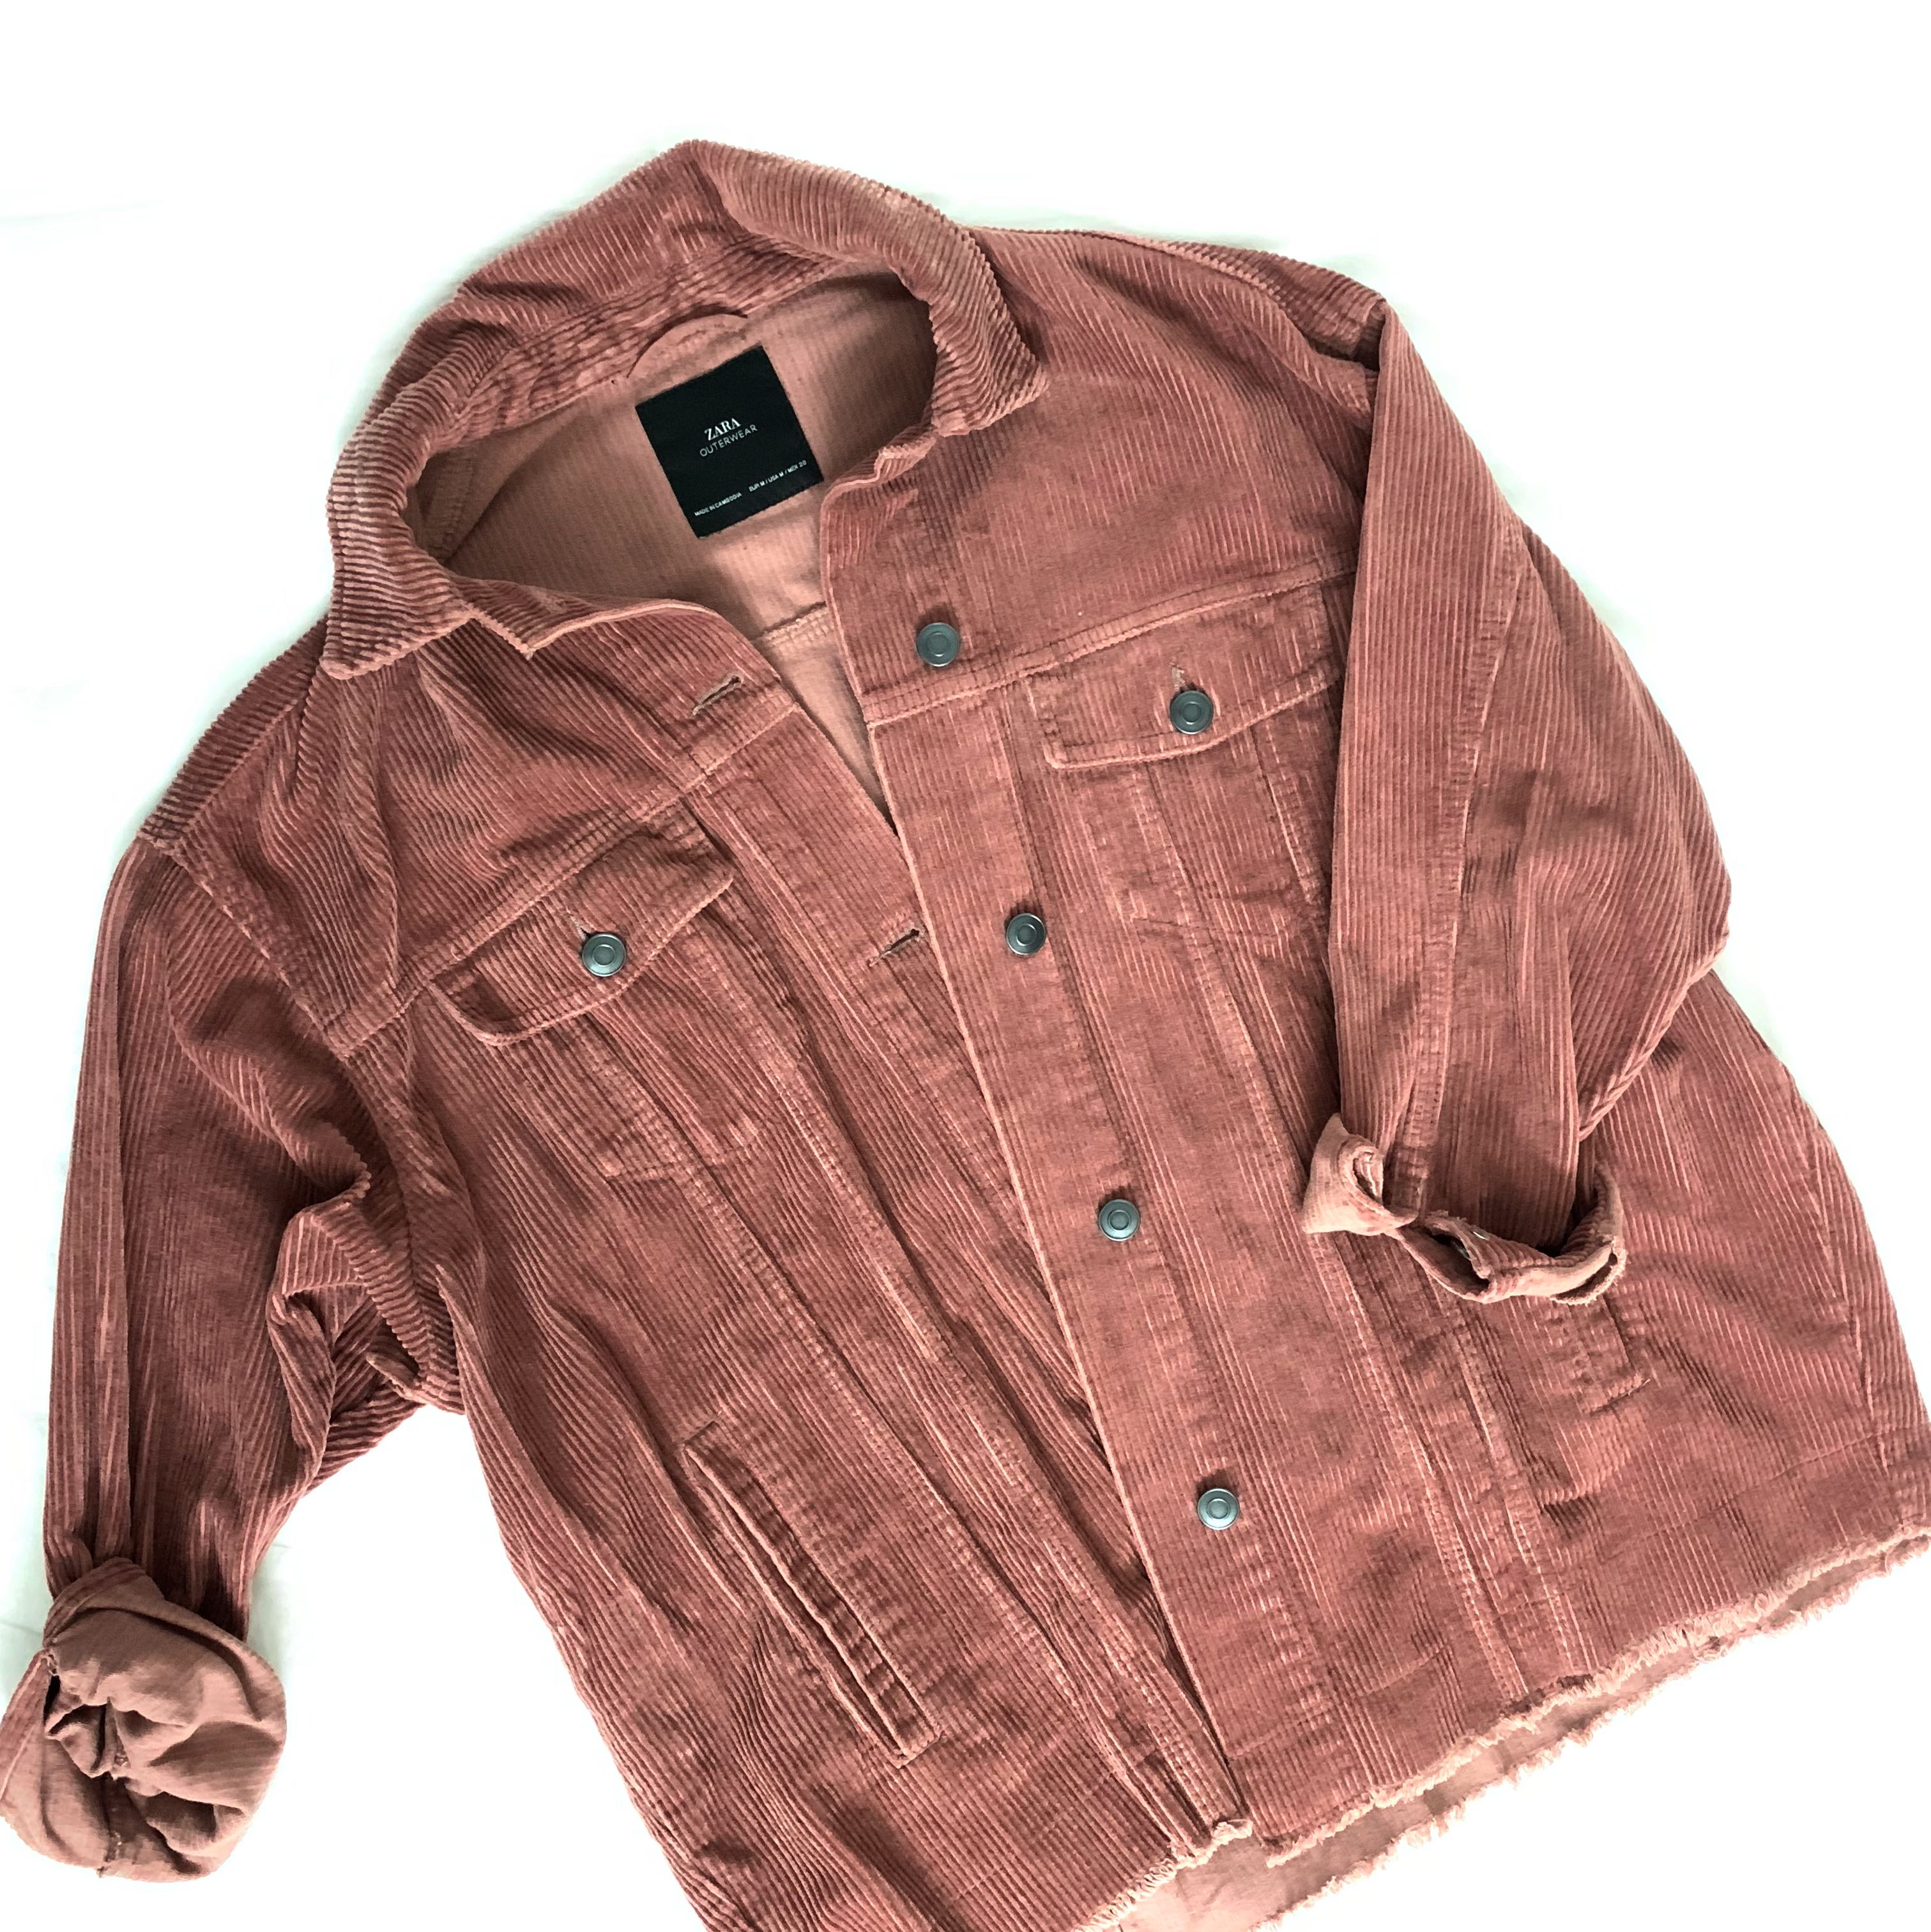 zara corduroy jacket pink